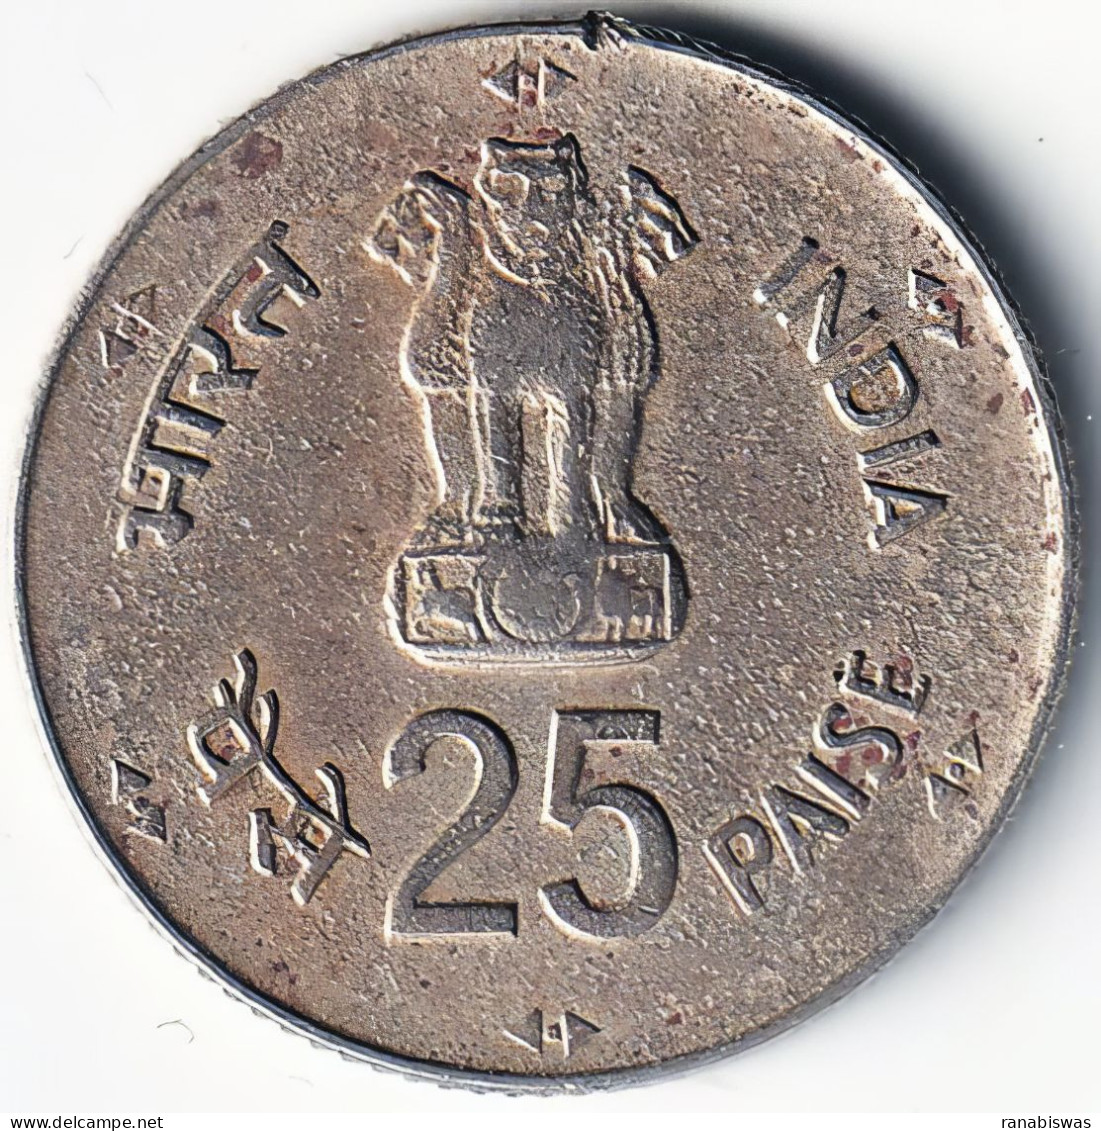 INDIA COIN LOT 96, 25 PAISE 1981, WORLD FOOD DAY, FAO, CALCUTTA MINT, XF, RARE - India